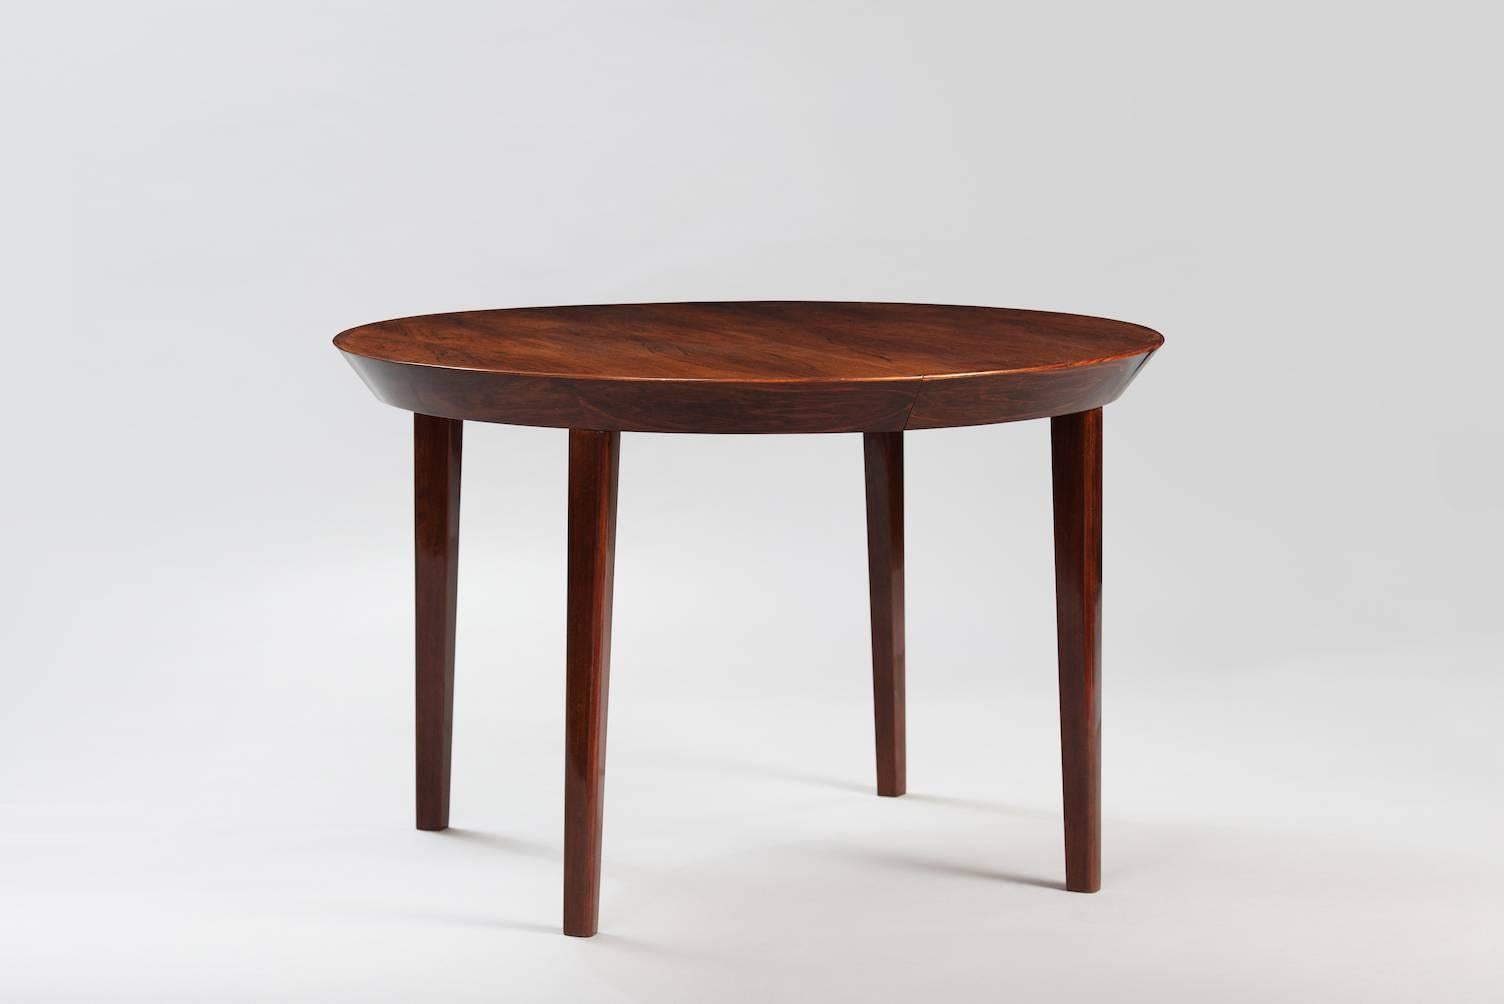 Rosewood extendible dining table.
Producer: Gudme Møbelfabrik